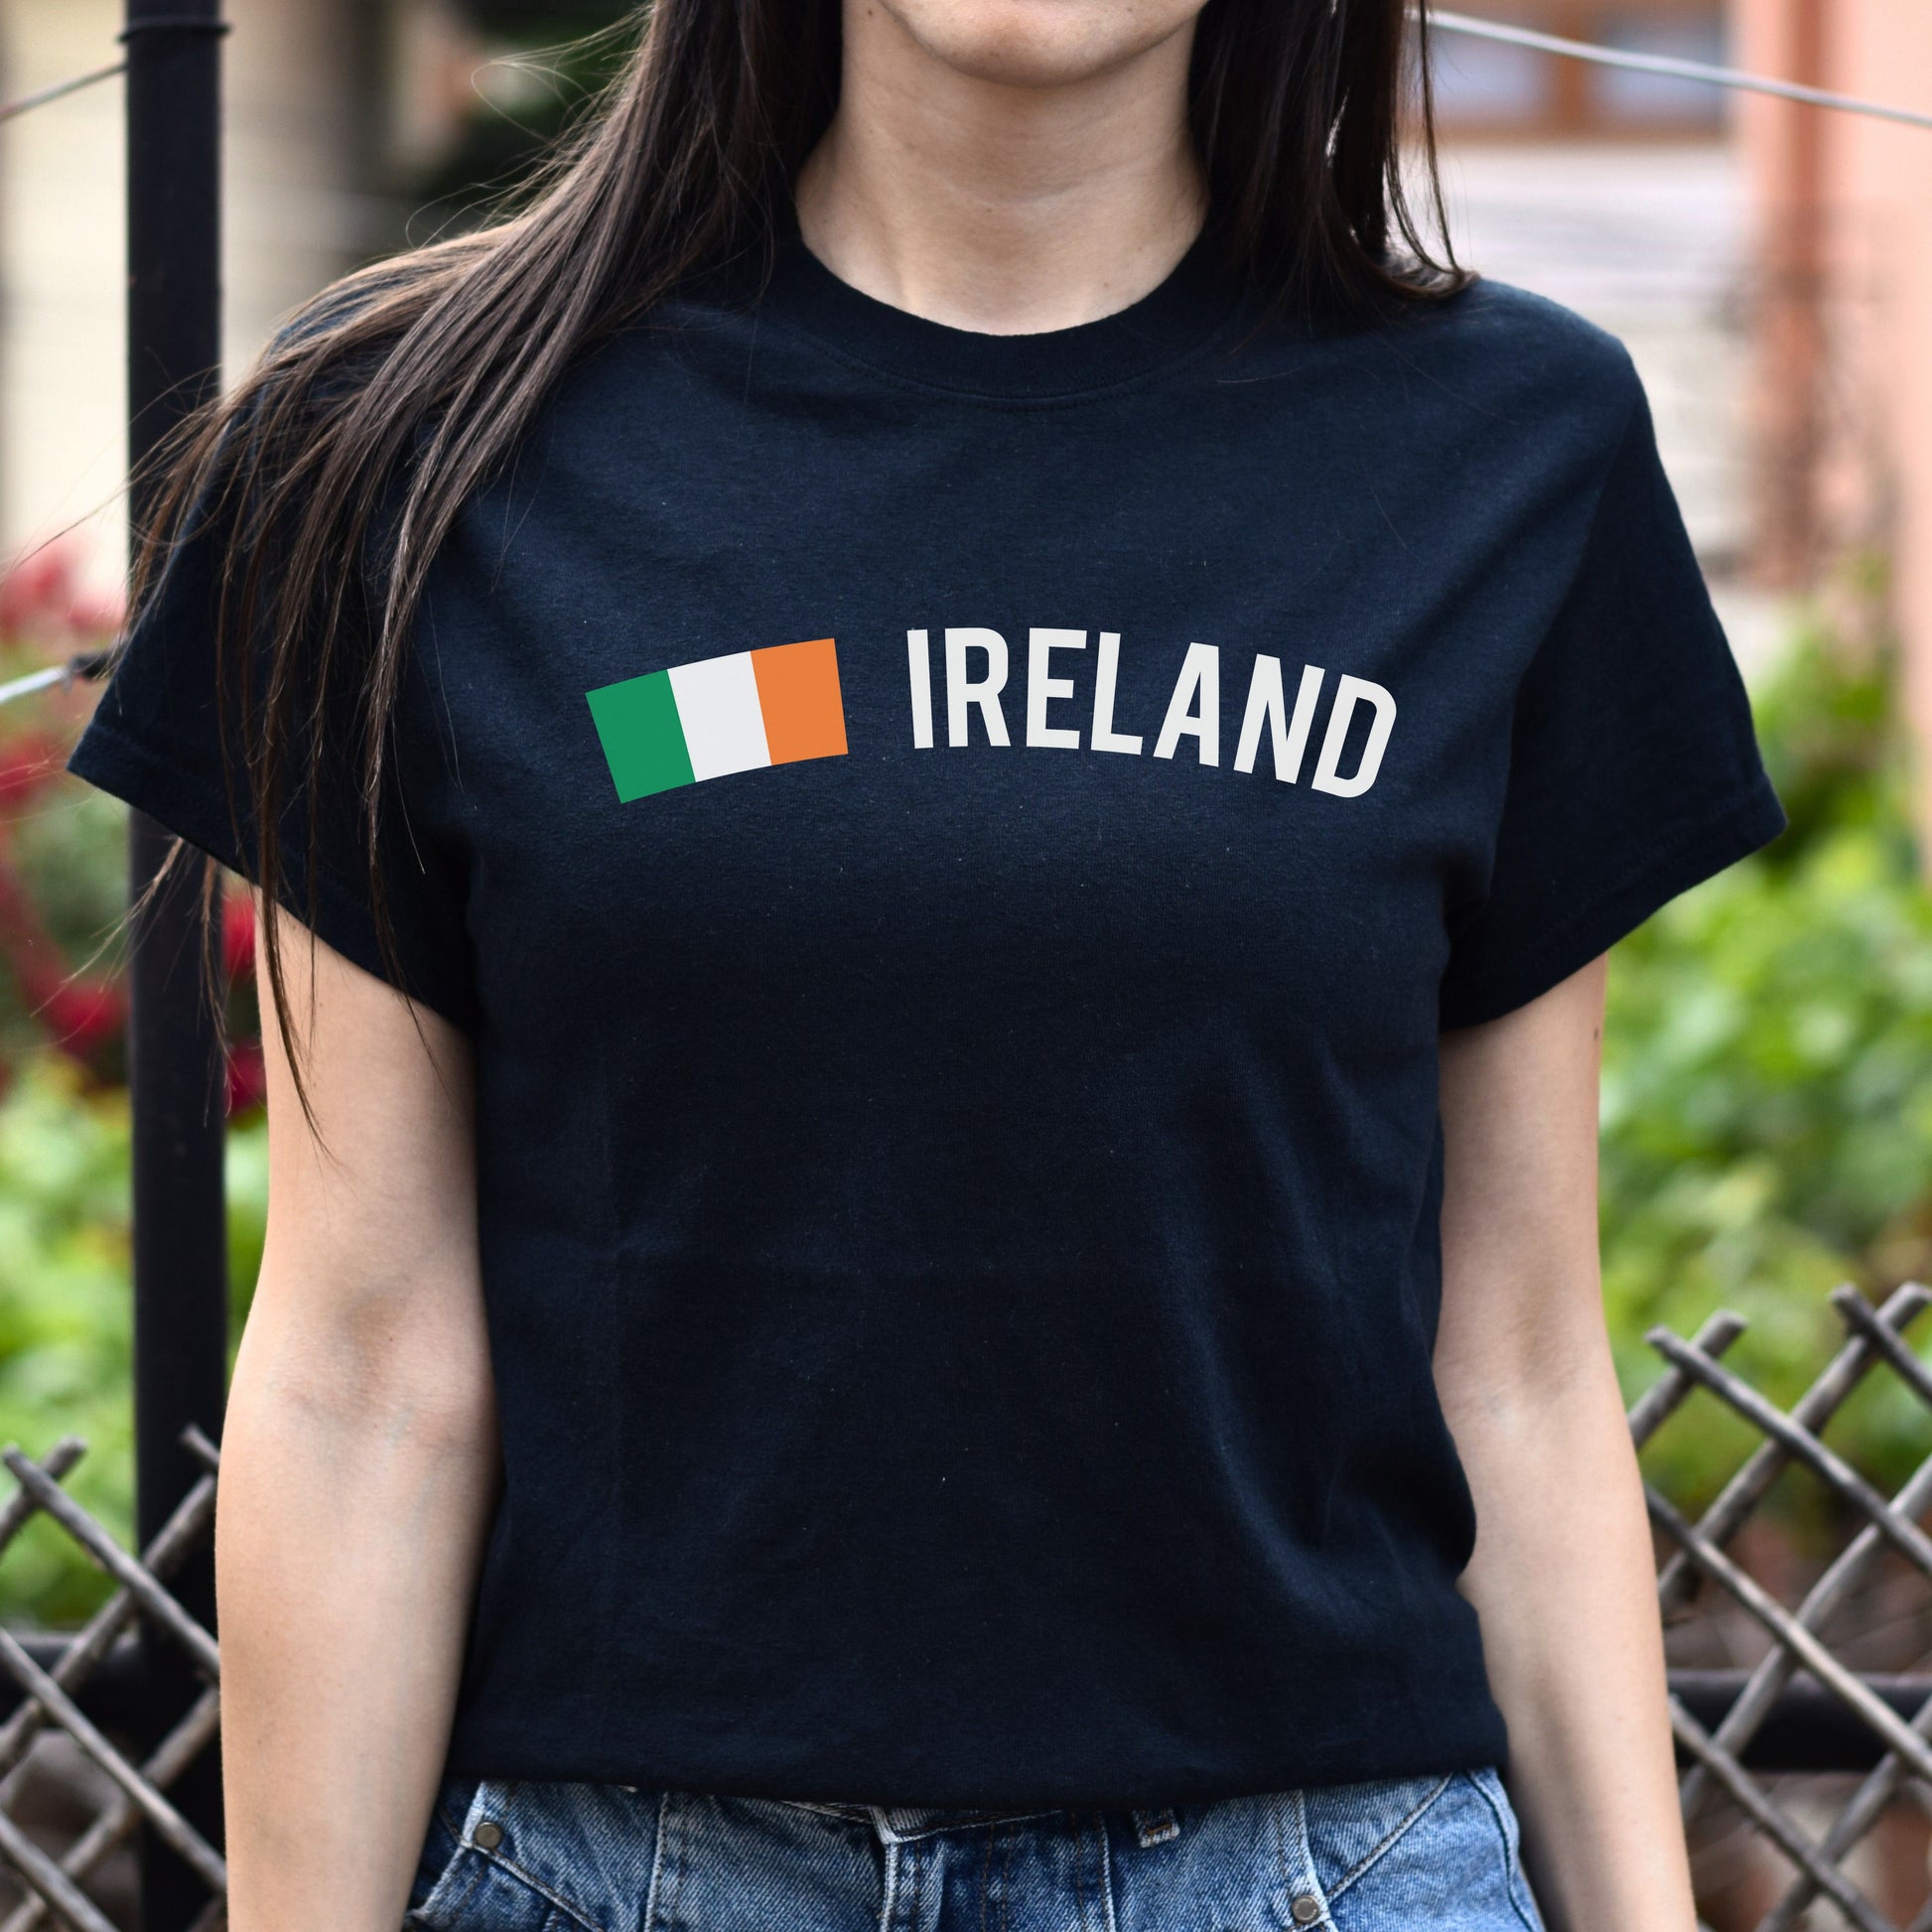 Ireland Unisex T-shirt gift Irish flag tee Dublin White Black Dark Heather-Black-Family-Gift-Planet